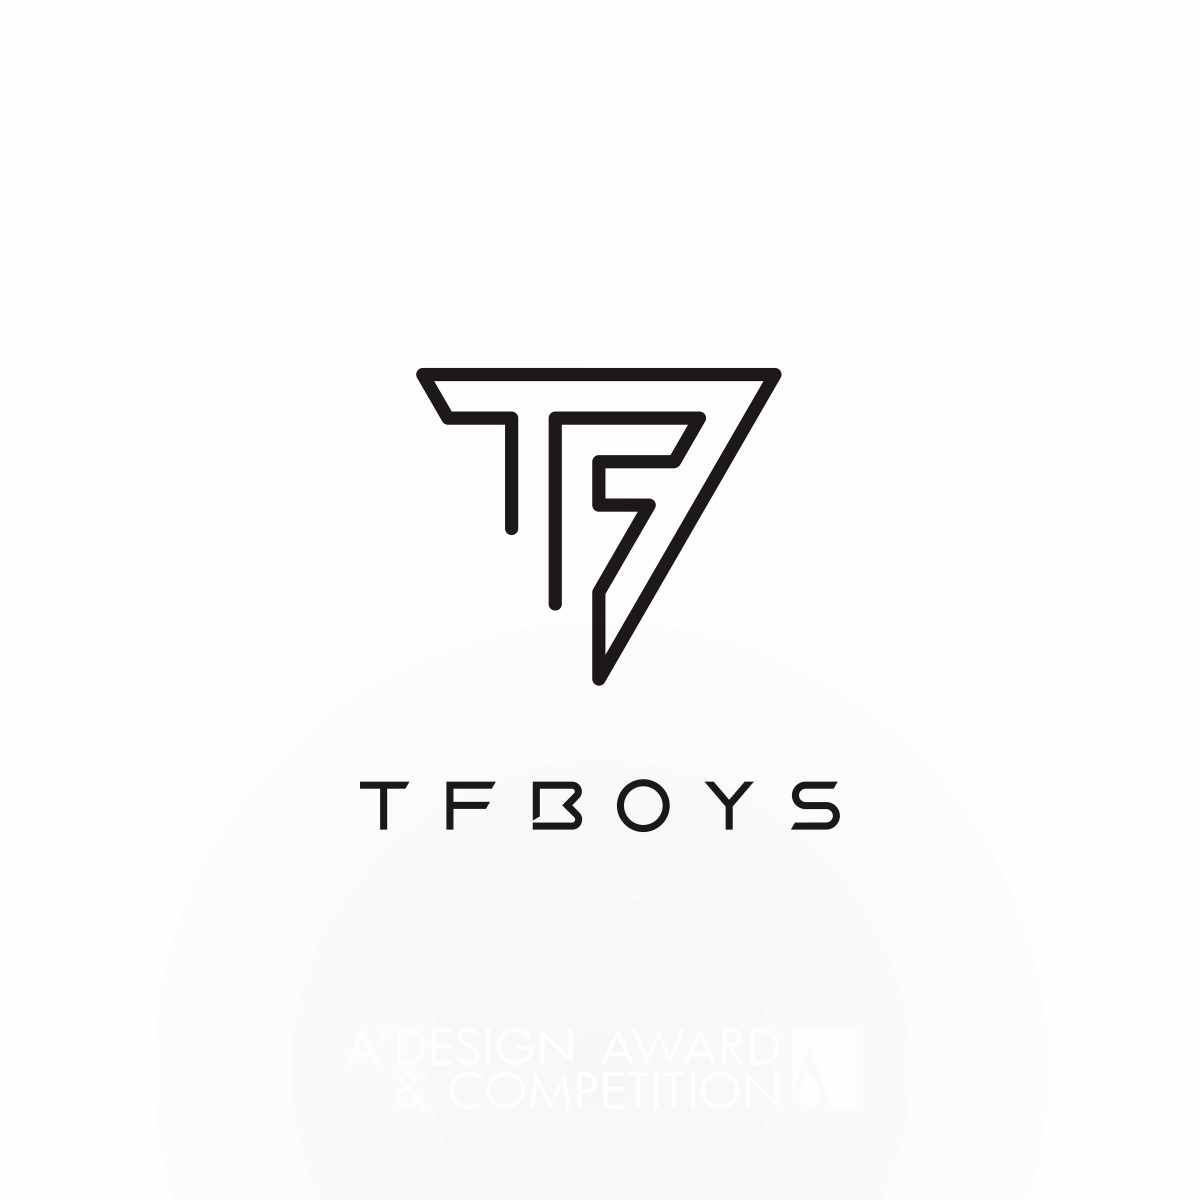 TFboys Logo design by Baohua Xie